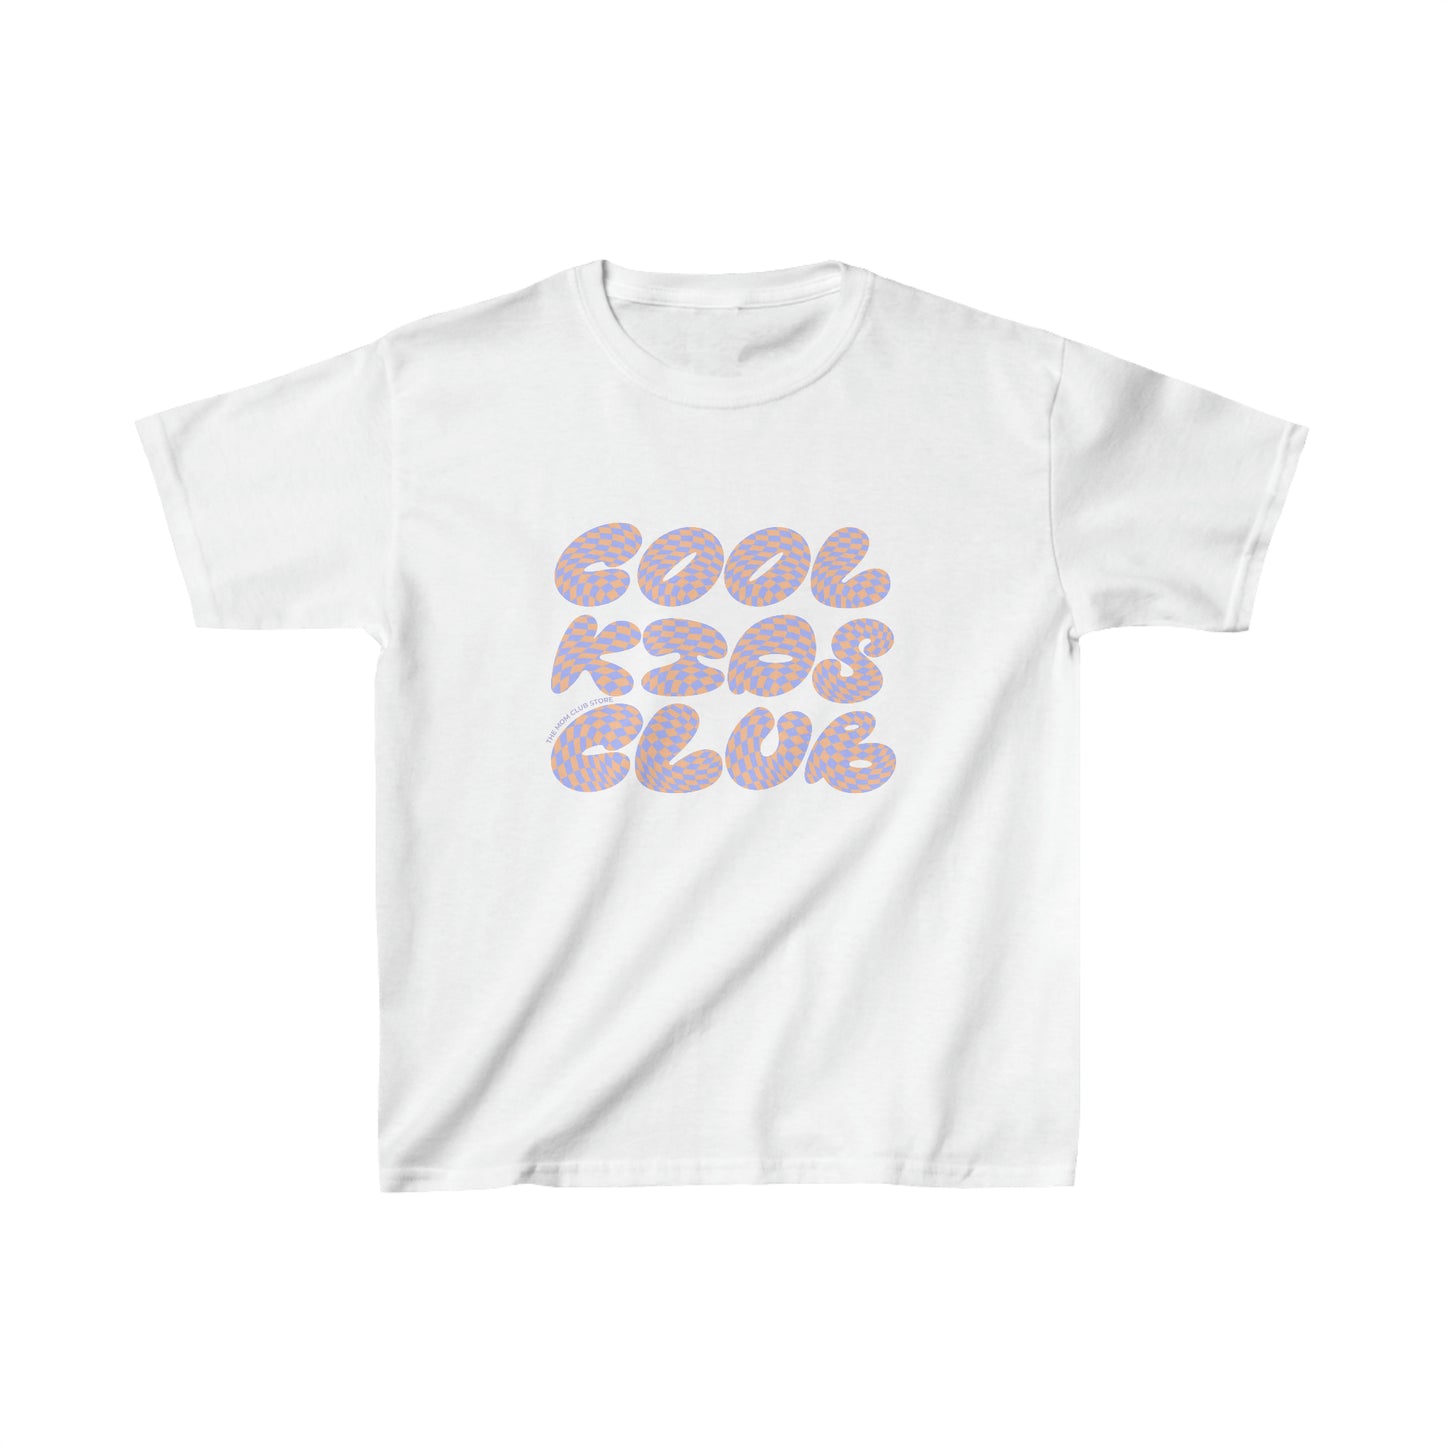 COOL KIDS CLUB Unisex Print Short-Sleeve T-Shirt for Kids